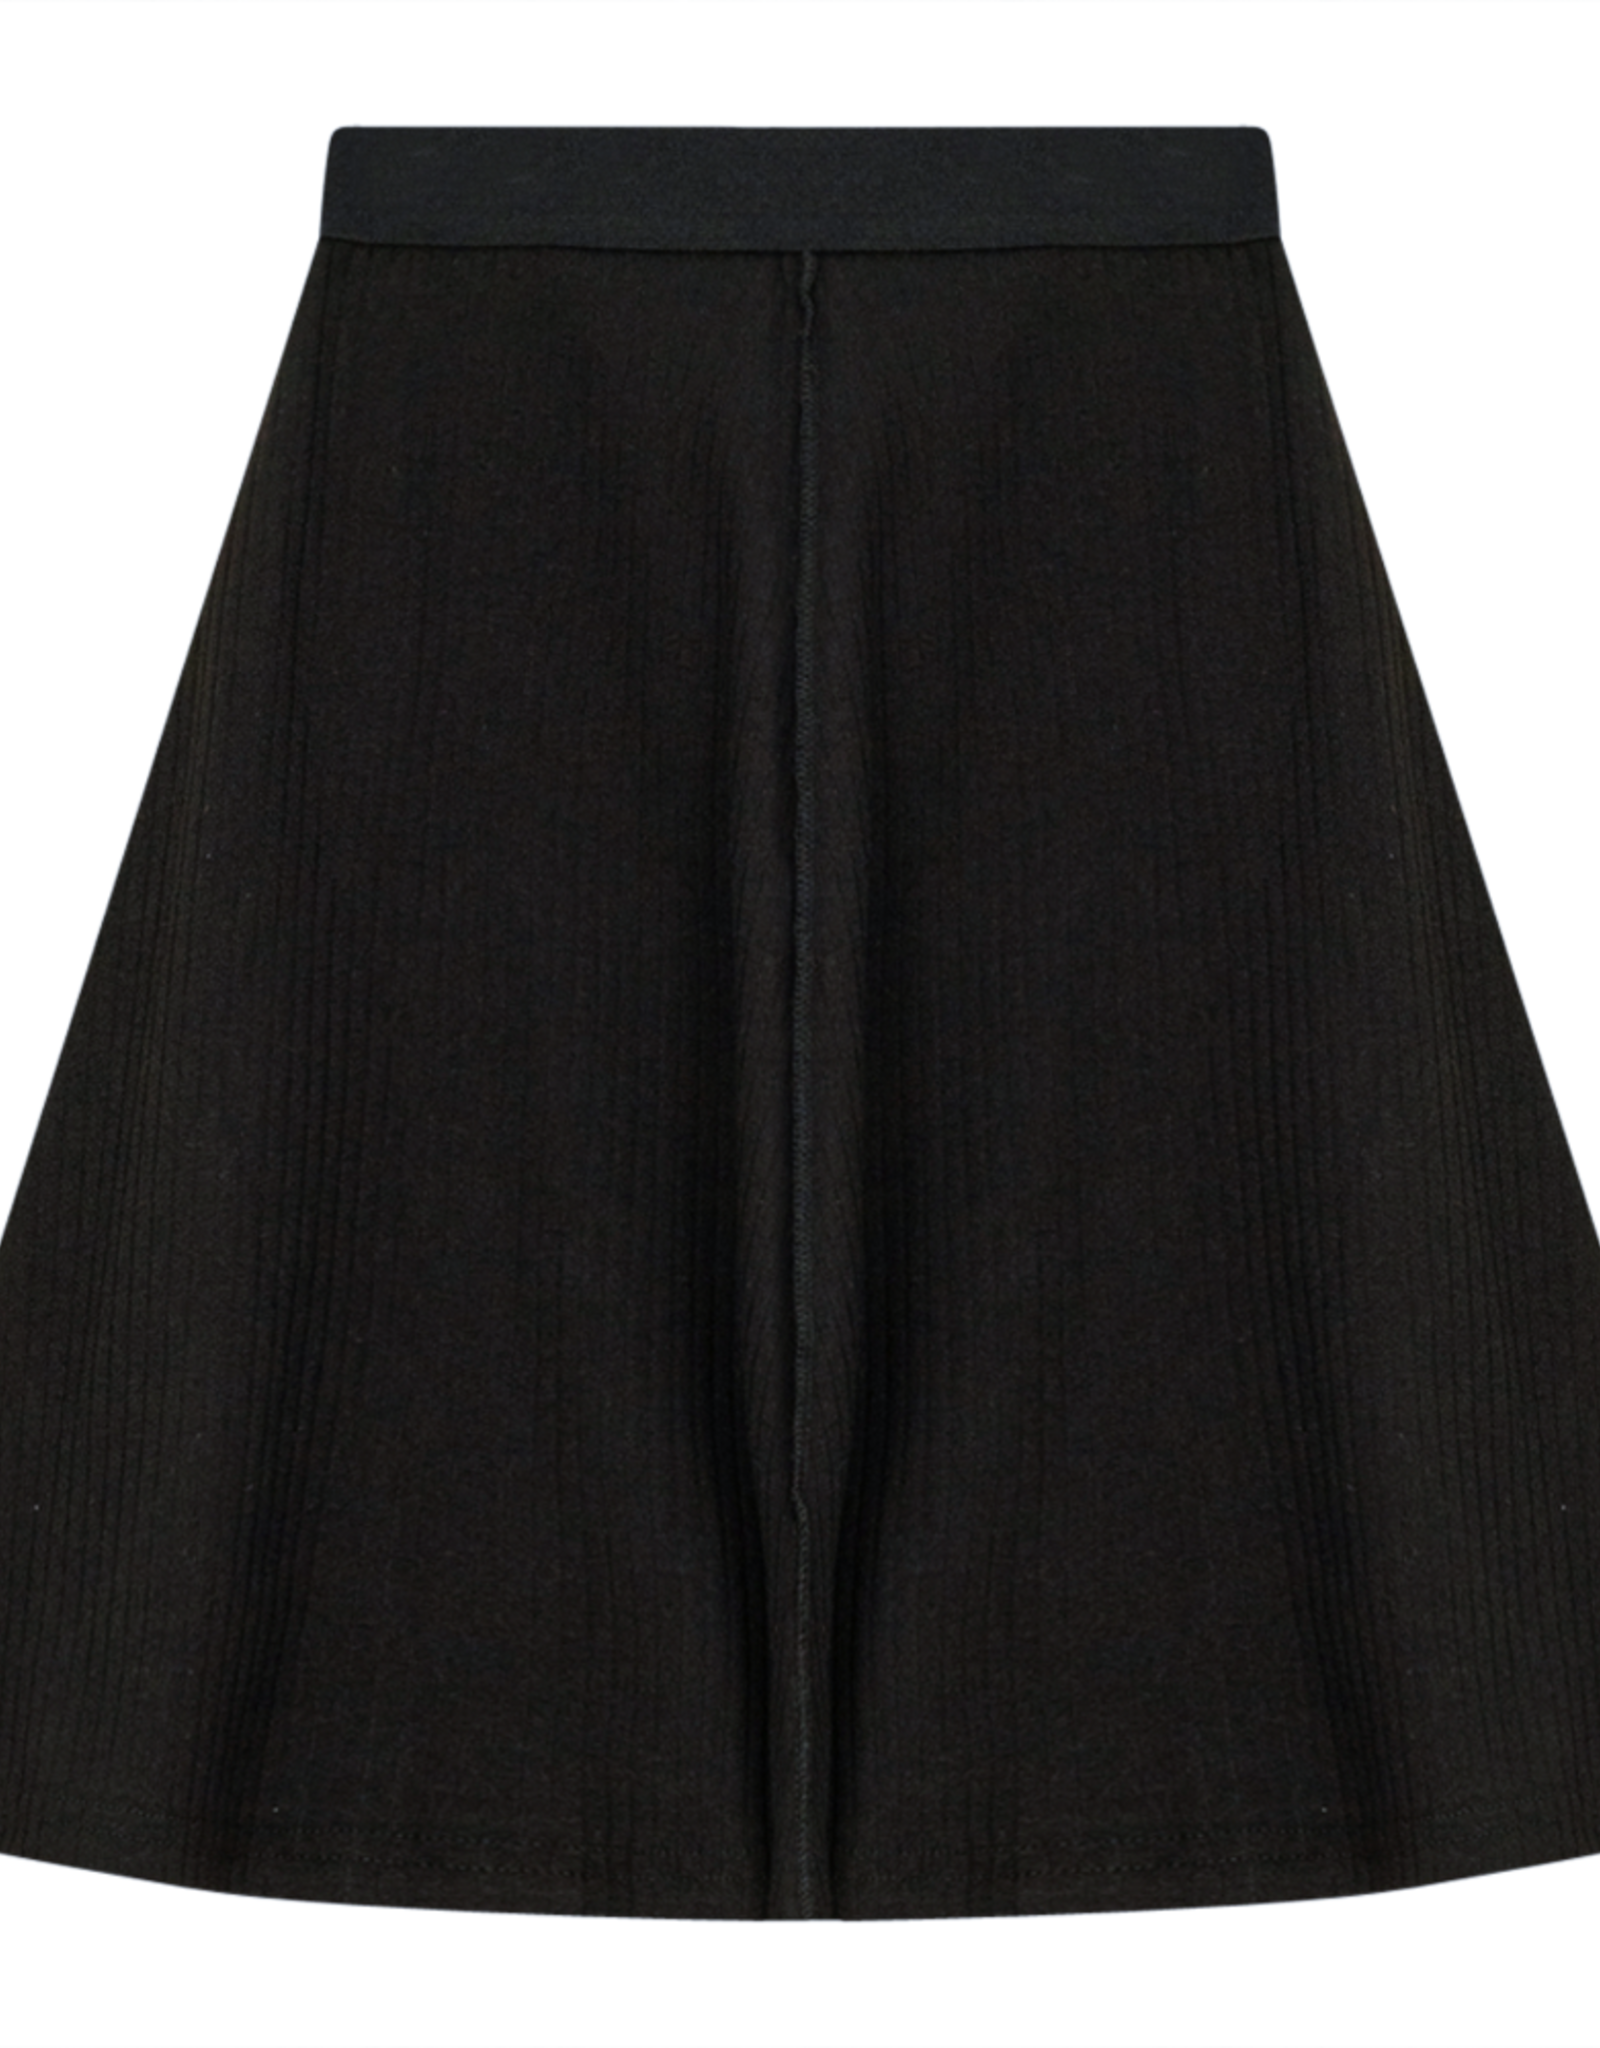 FYI FYI Flare Ribbed Skirt with Black Elastic Waistband